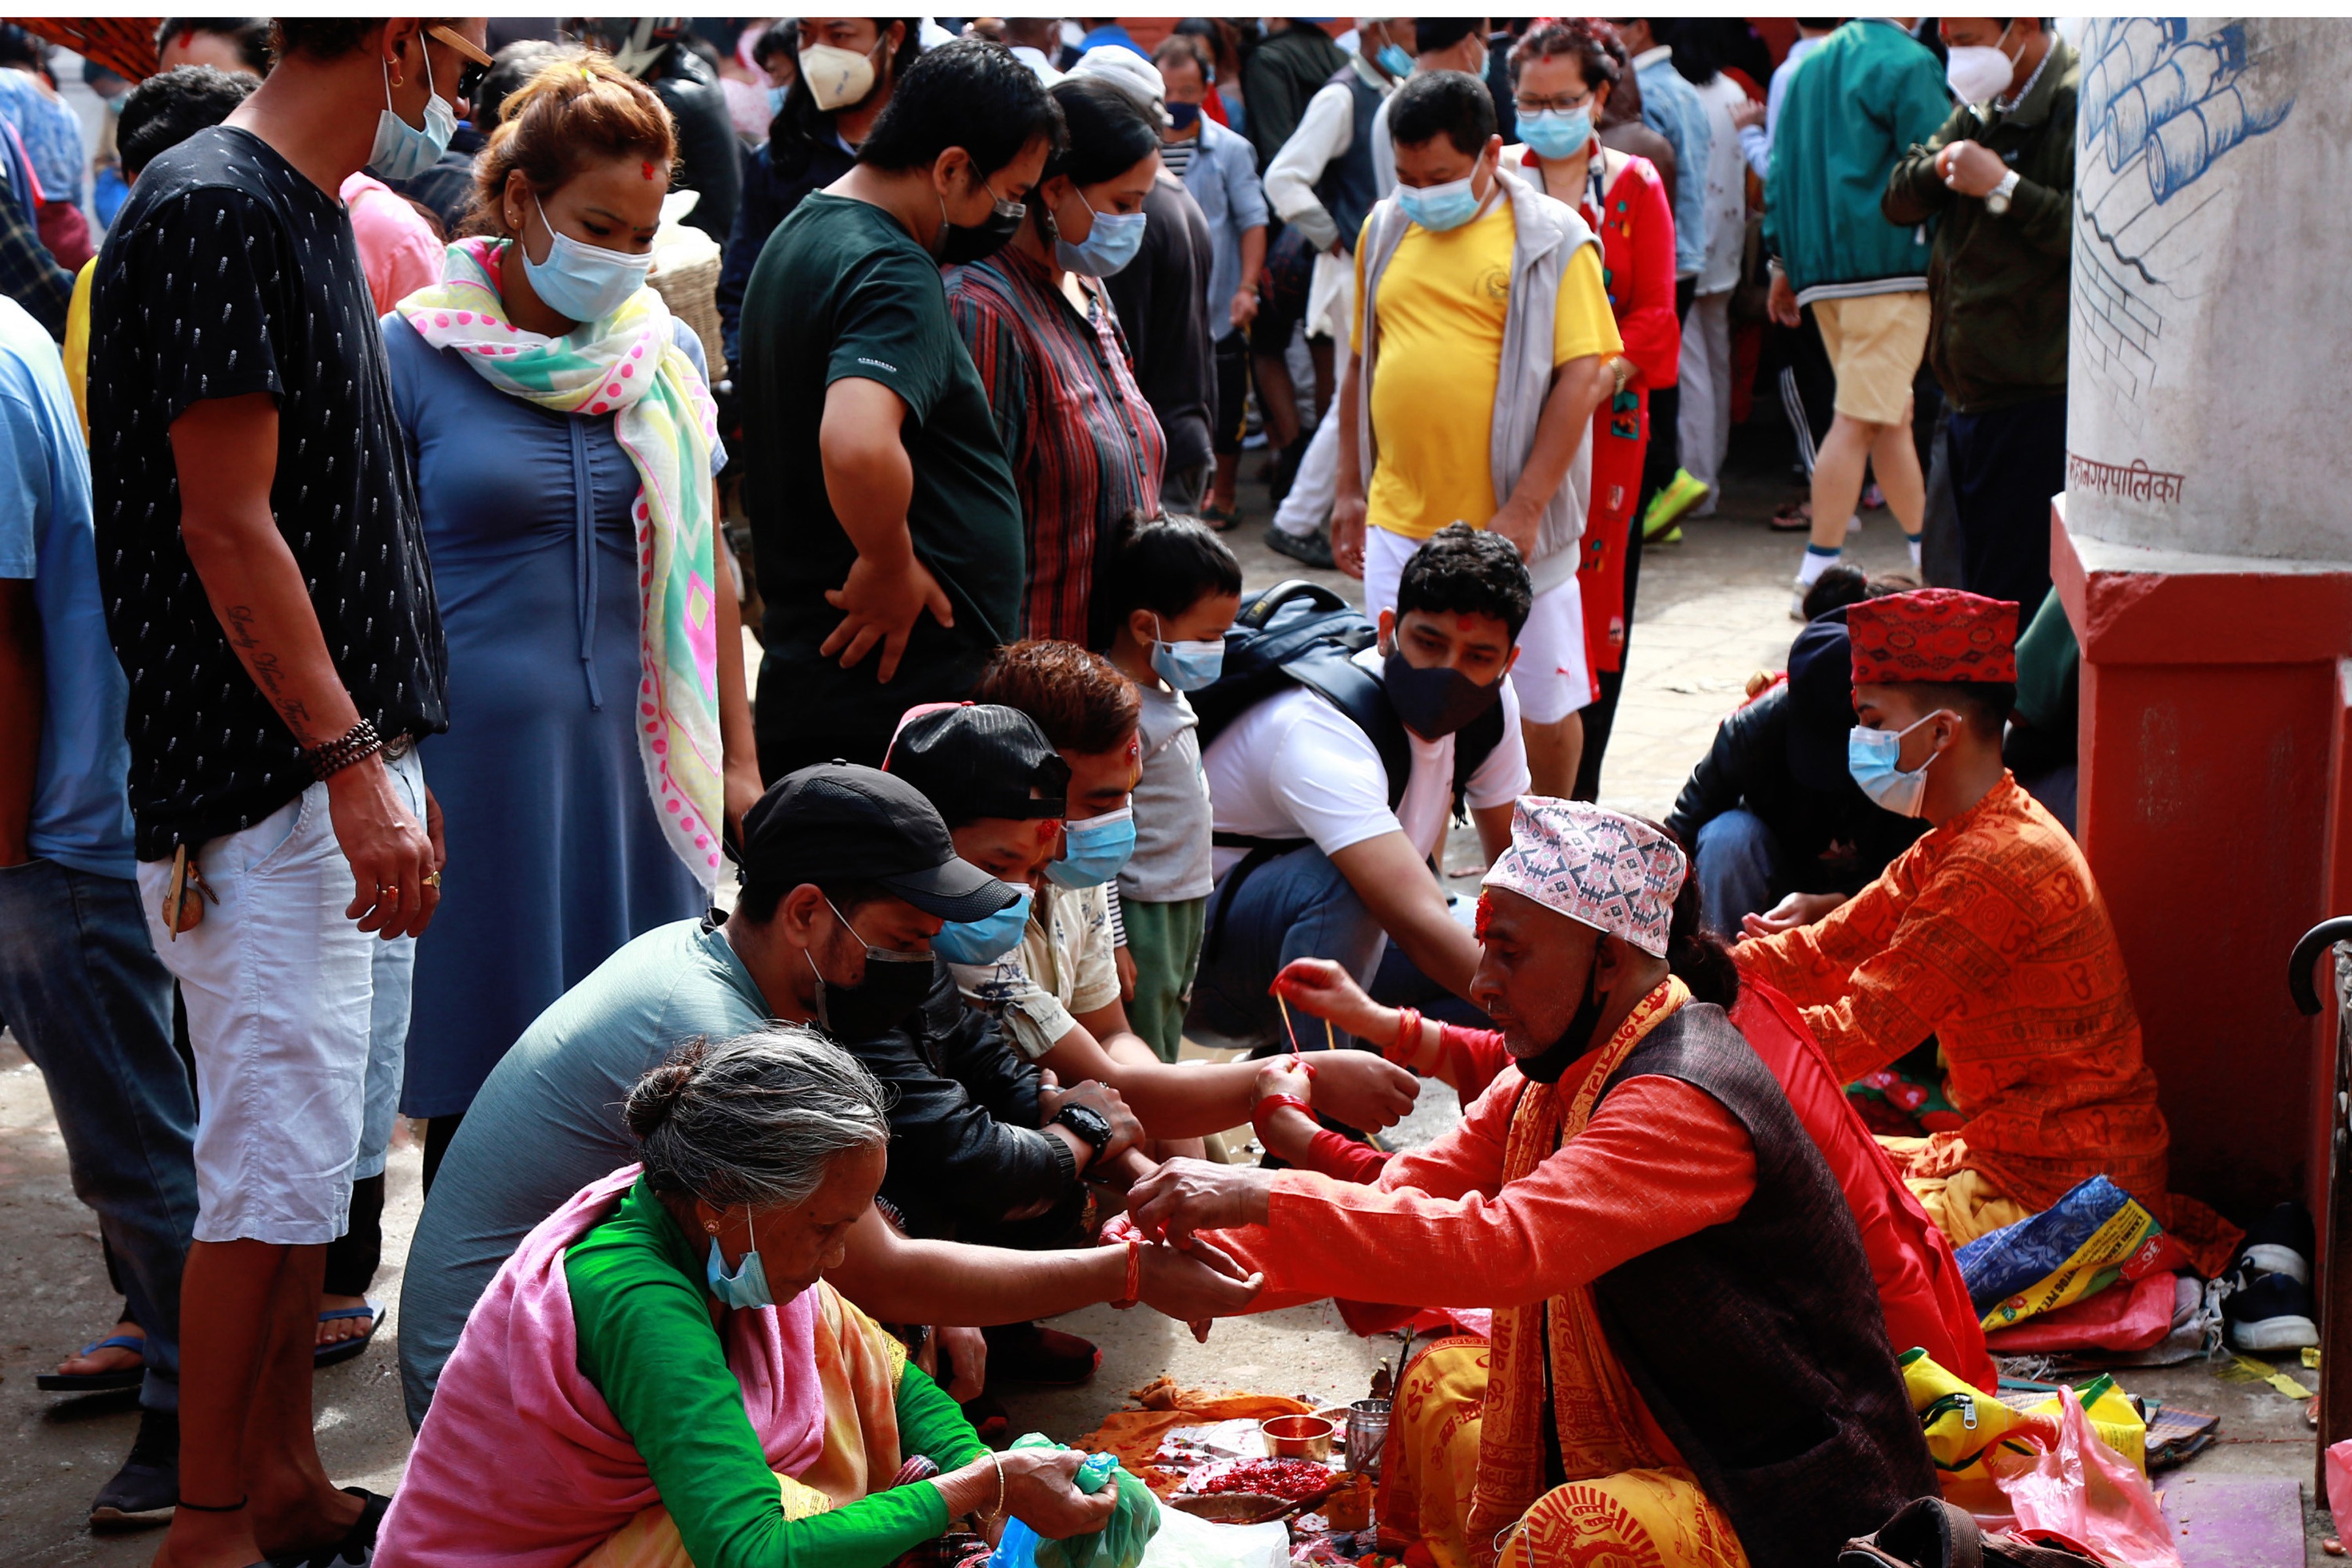 Celebrated on Janai Purnima, Rakshya Bandhan festival